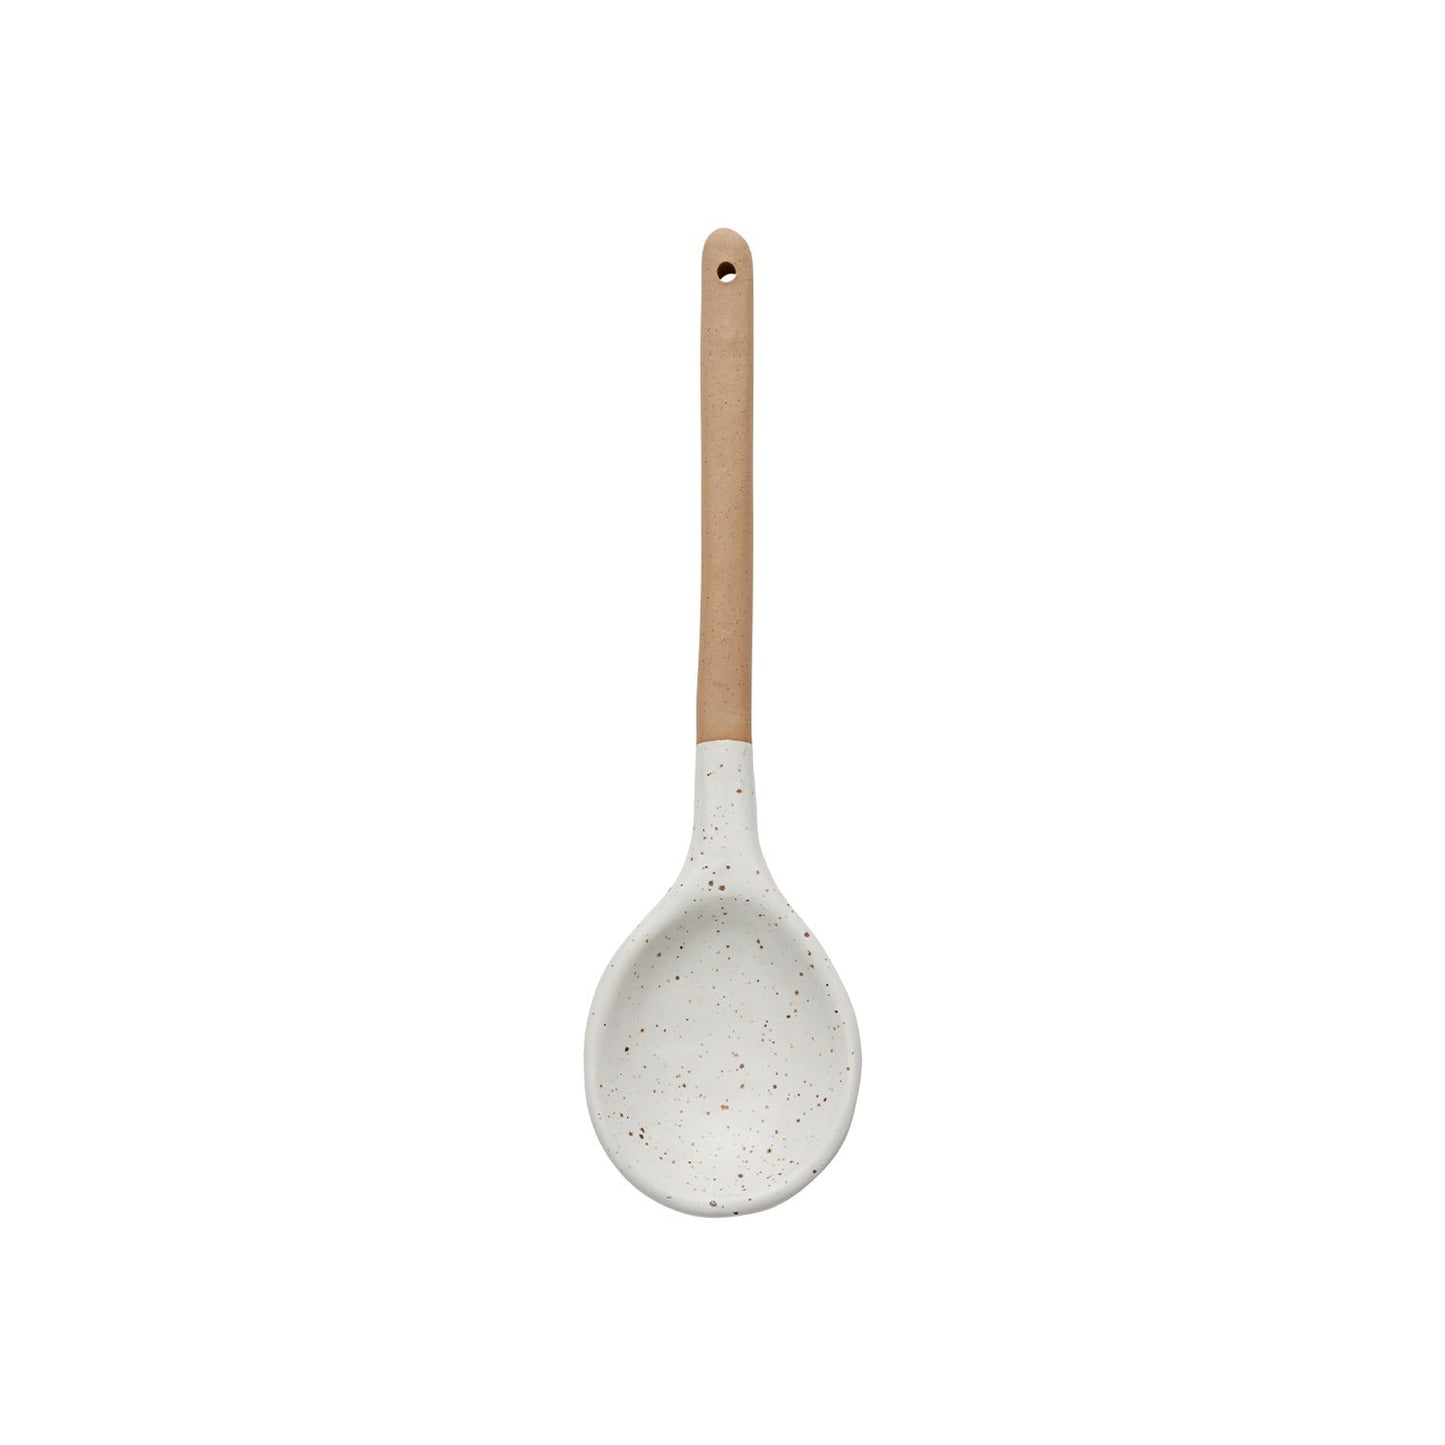 Simplistic Spoon